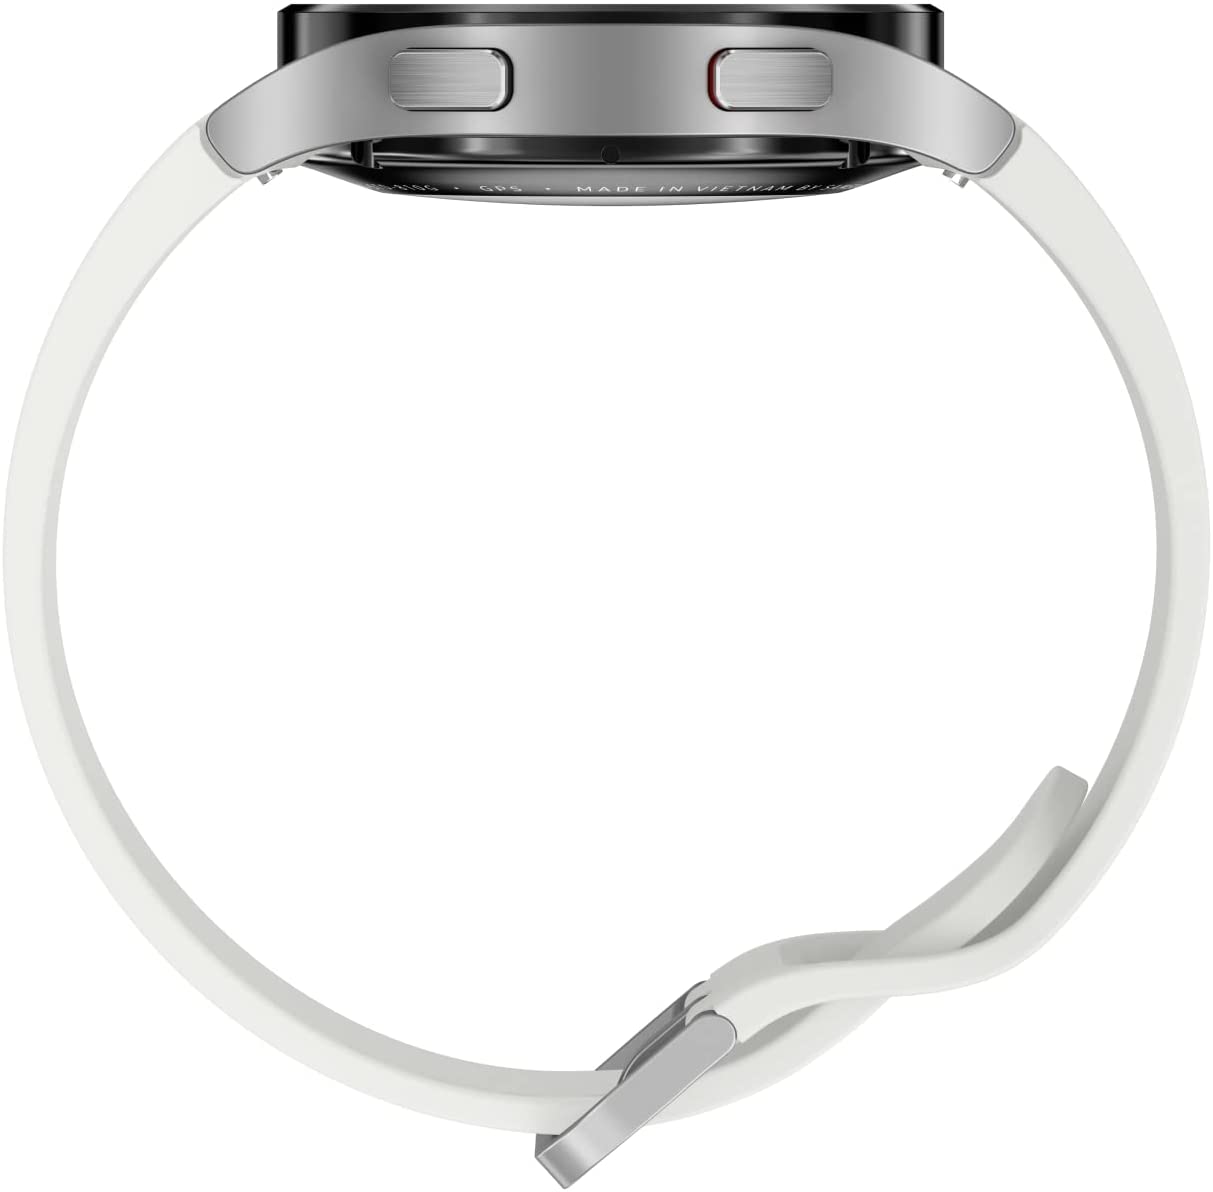 Samsung SM-R860NZSCXAA Galaxy Watch4 40mm Bluetooth Silver - Certified Refurbished